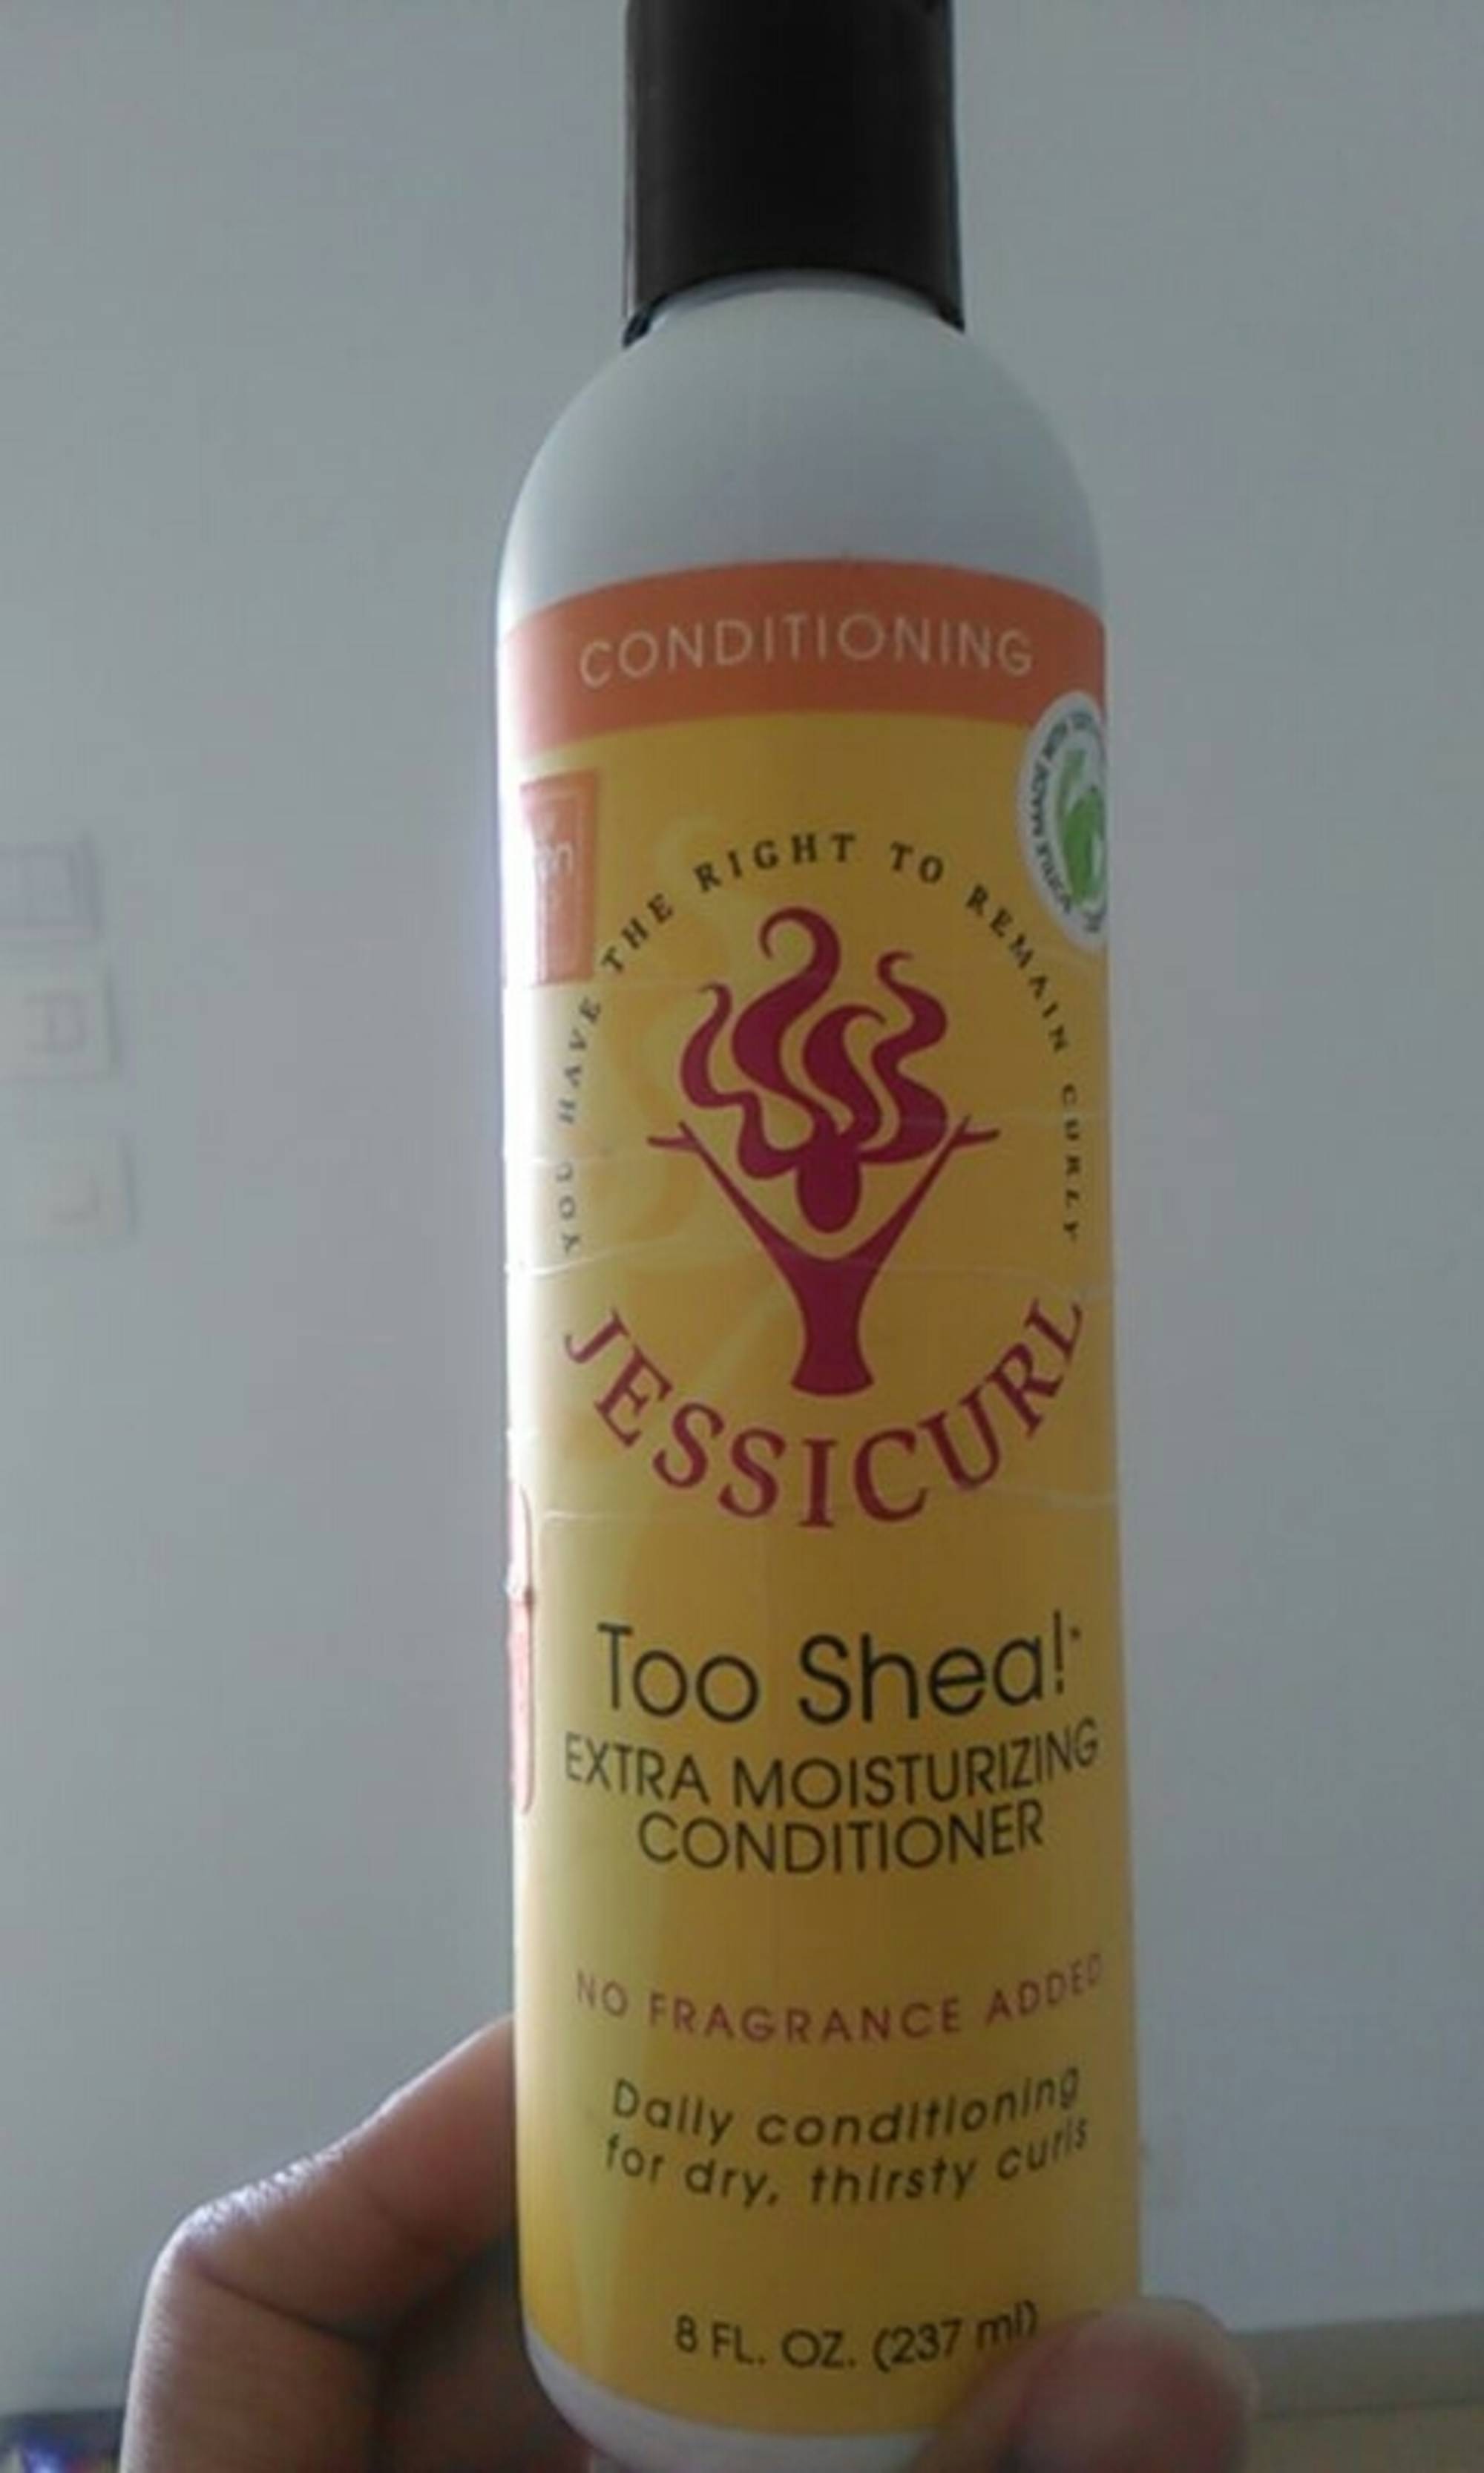 JESSICURL - Too shea - Extra moisturizing conditioner